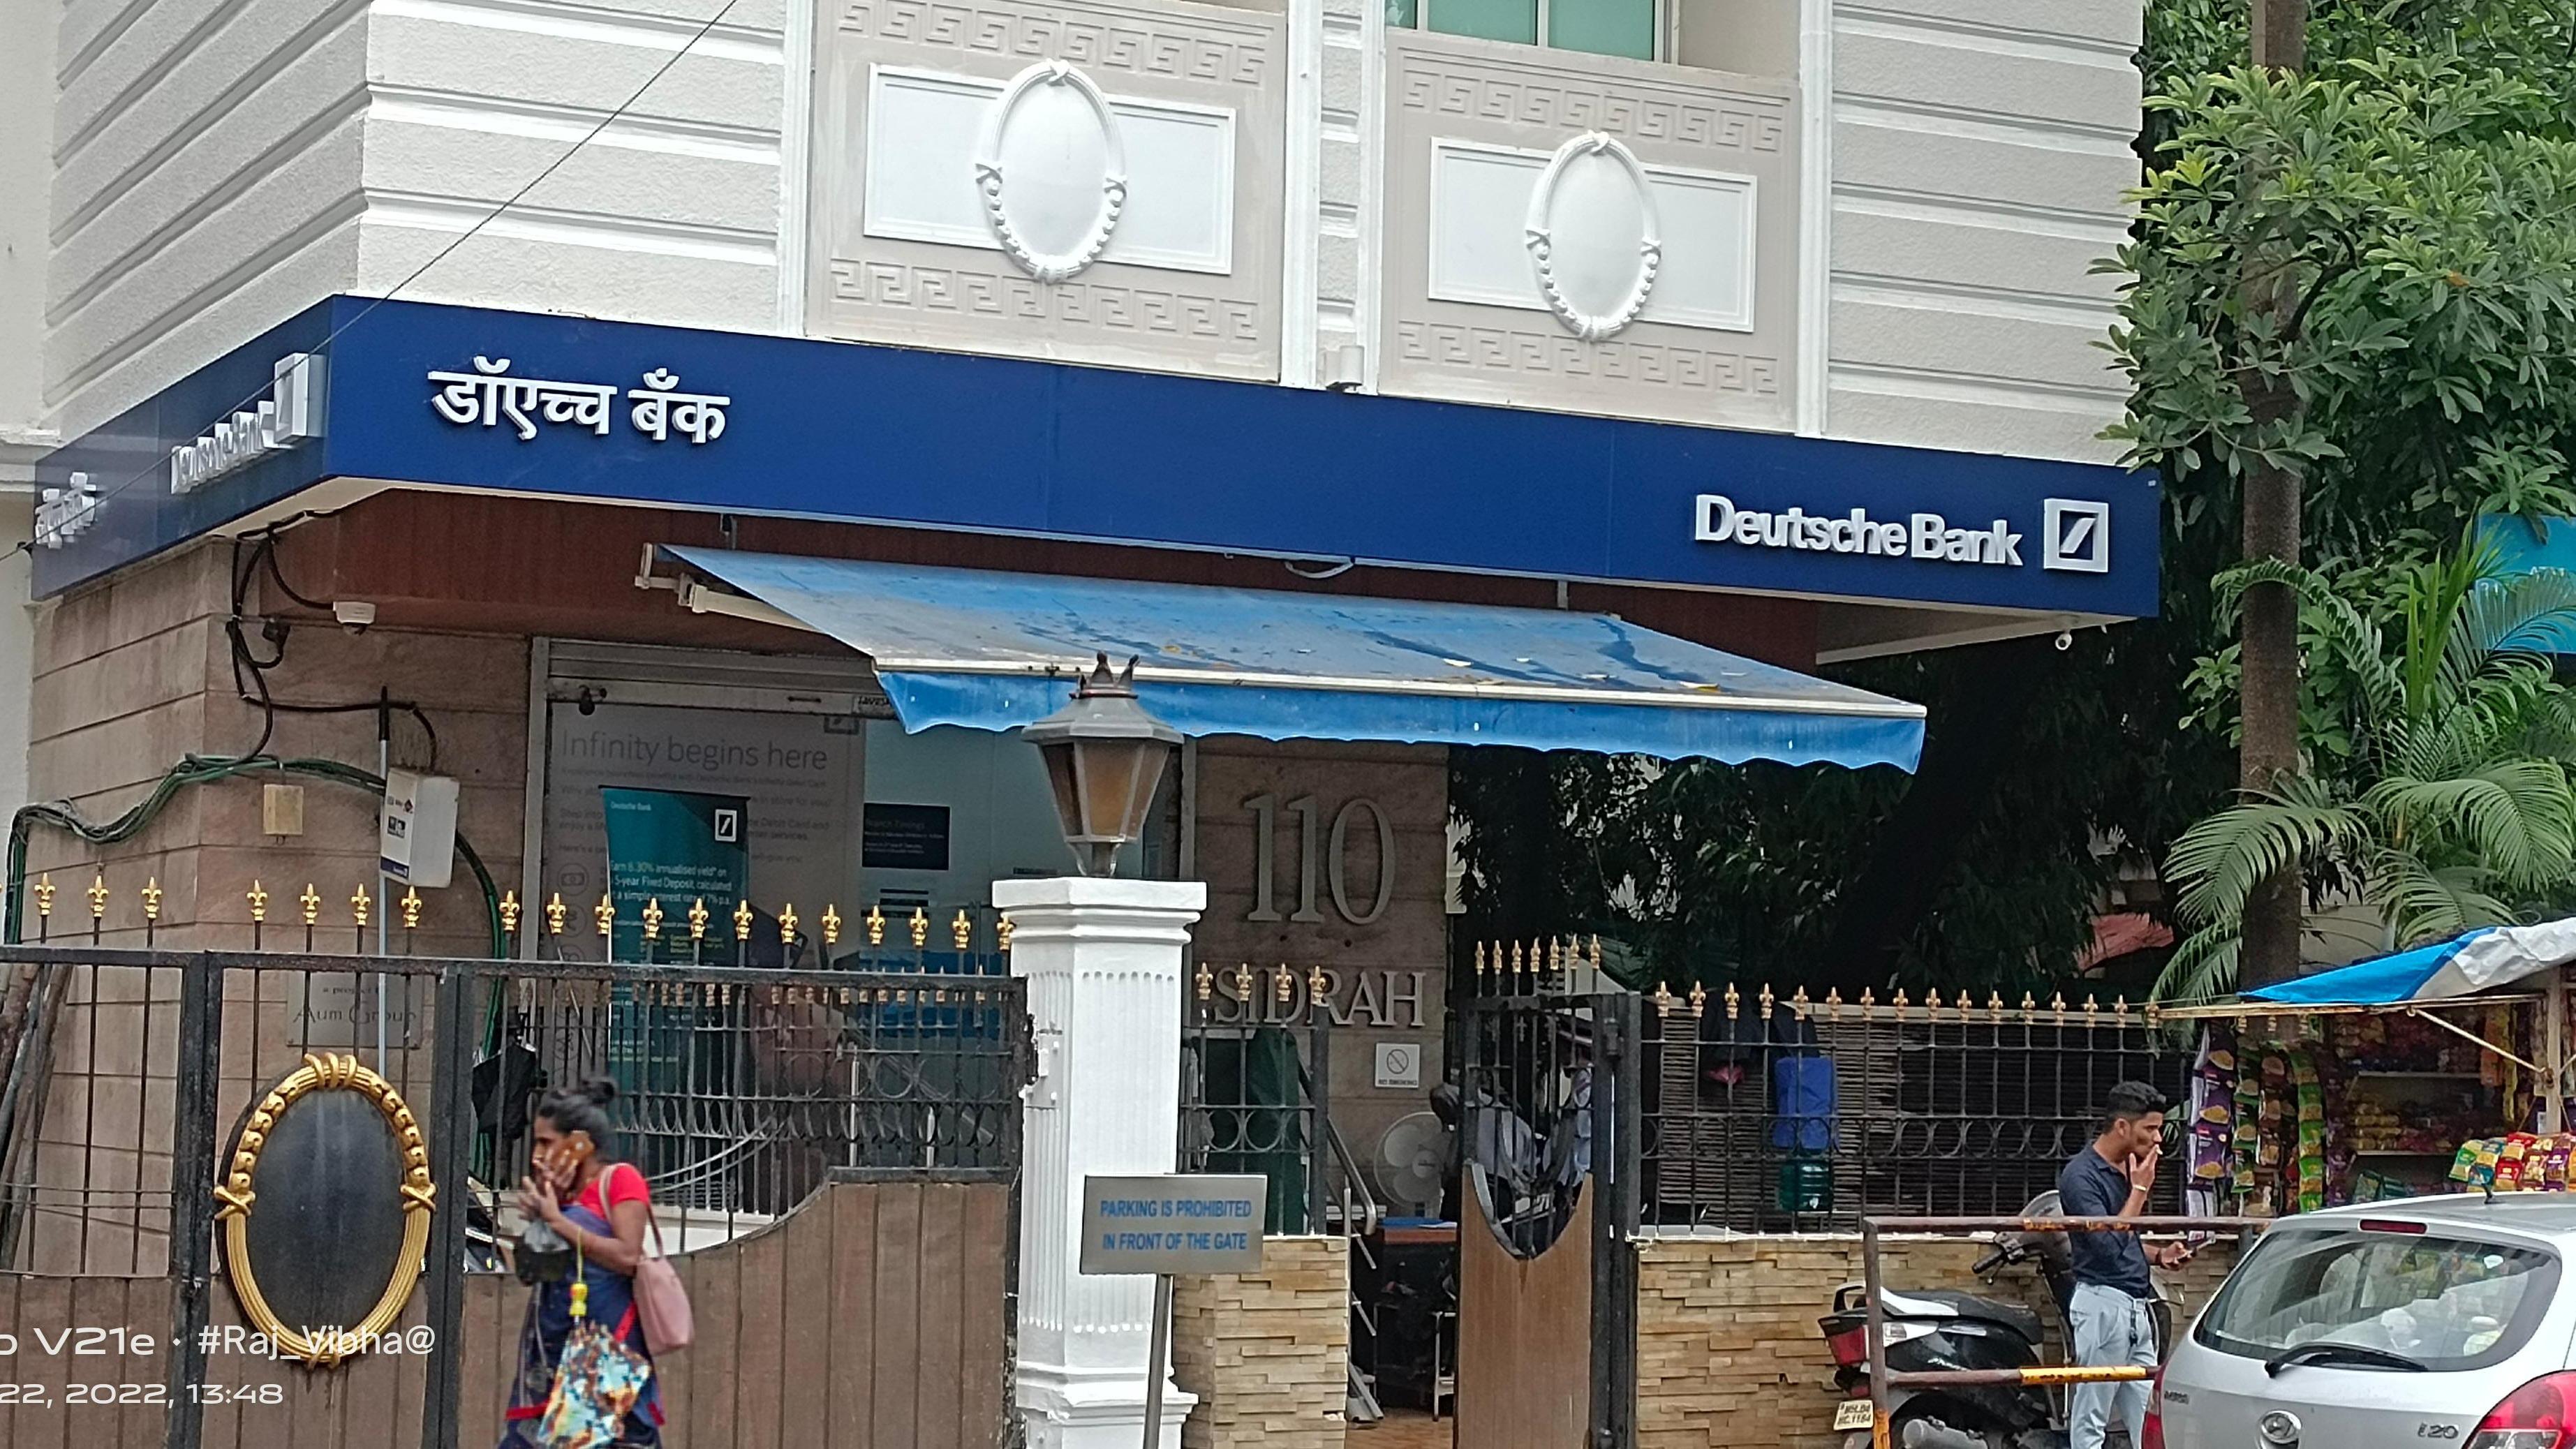 Deutsche Bank India Khar Branch Mumbai